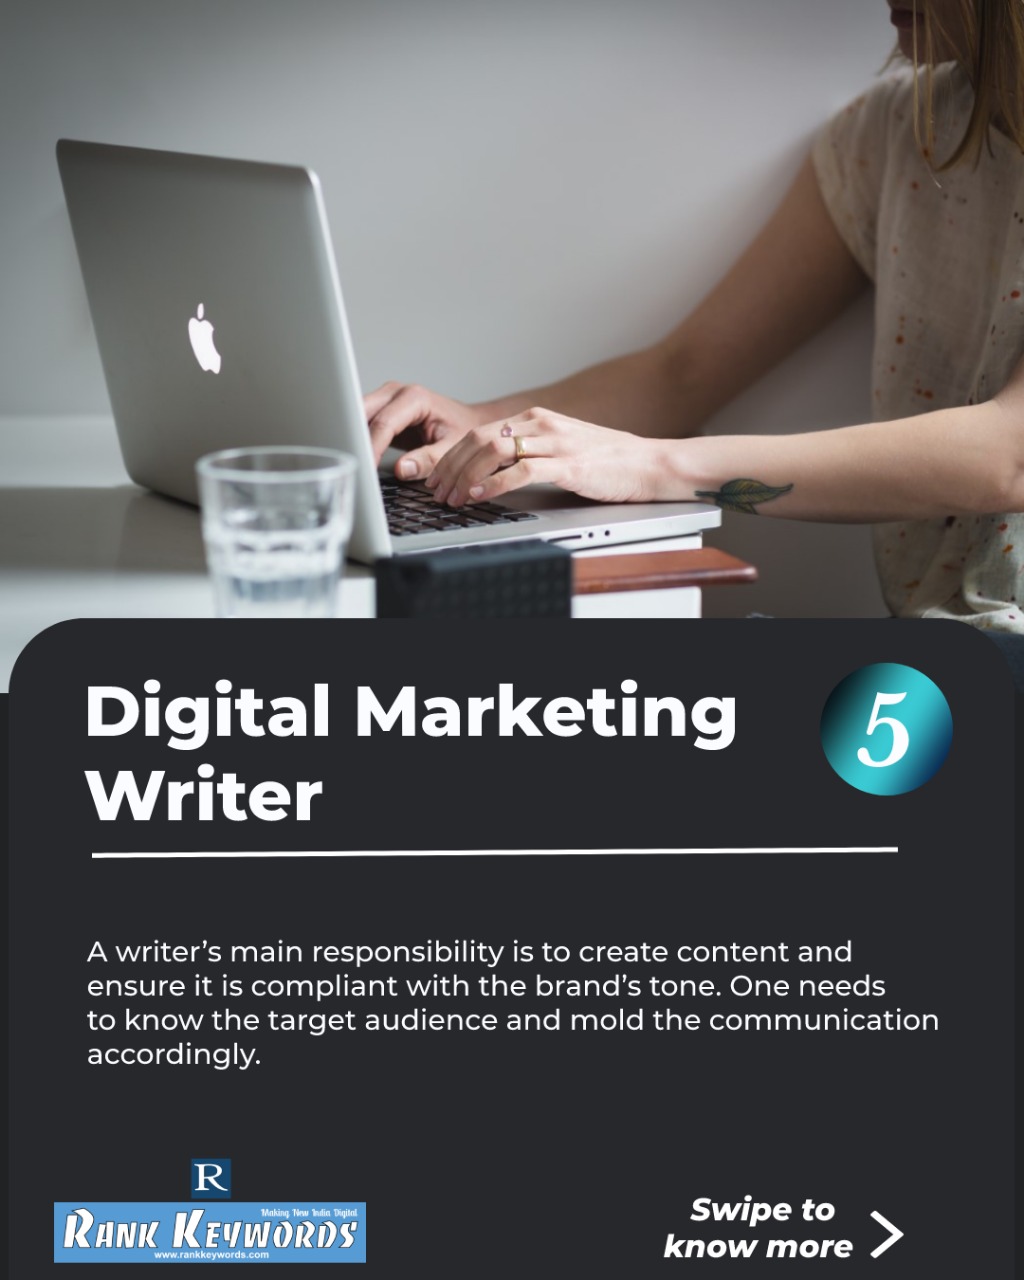 Content Writer in Digital Marketing